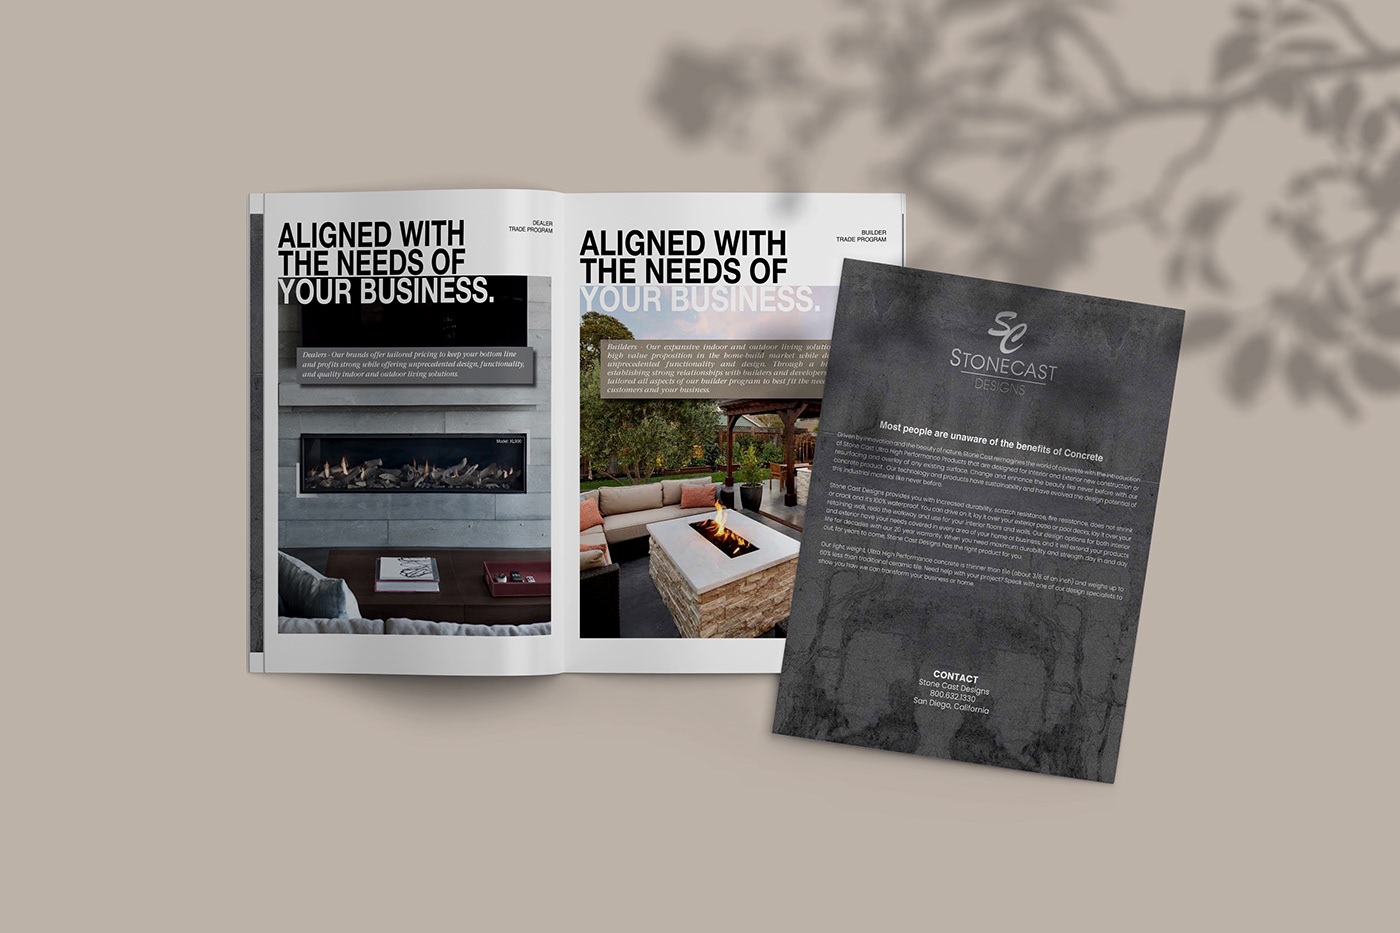 Adobe InDesign Adobe Photoshop Catalogue design digital design graphic design  Image Editing interior design  Layout Design Page layout design print design 